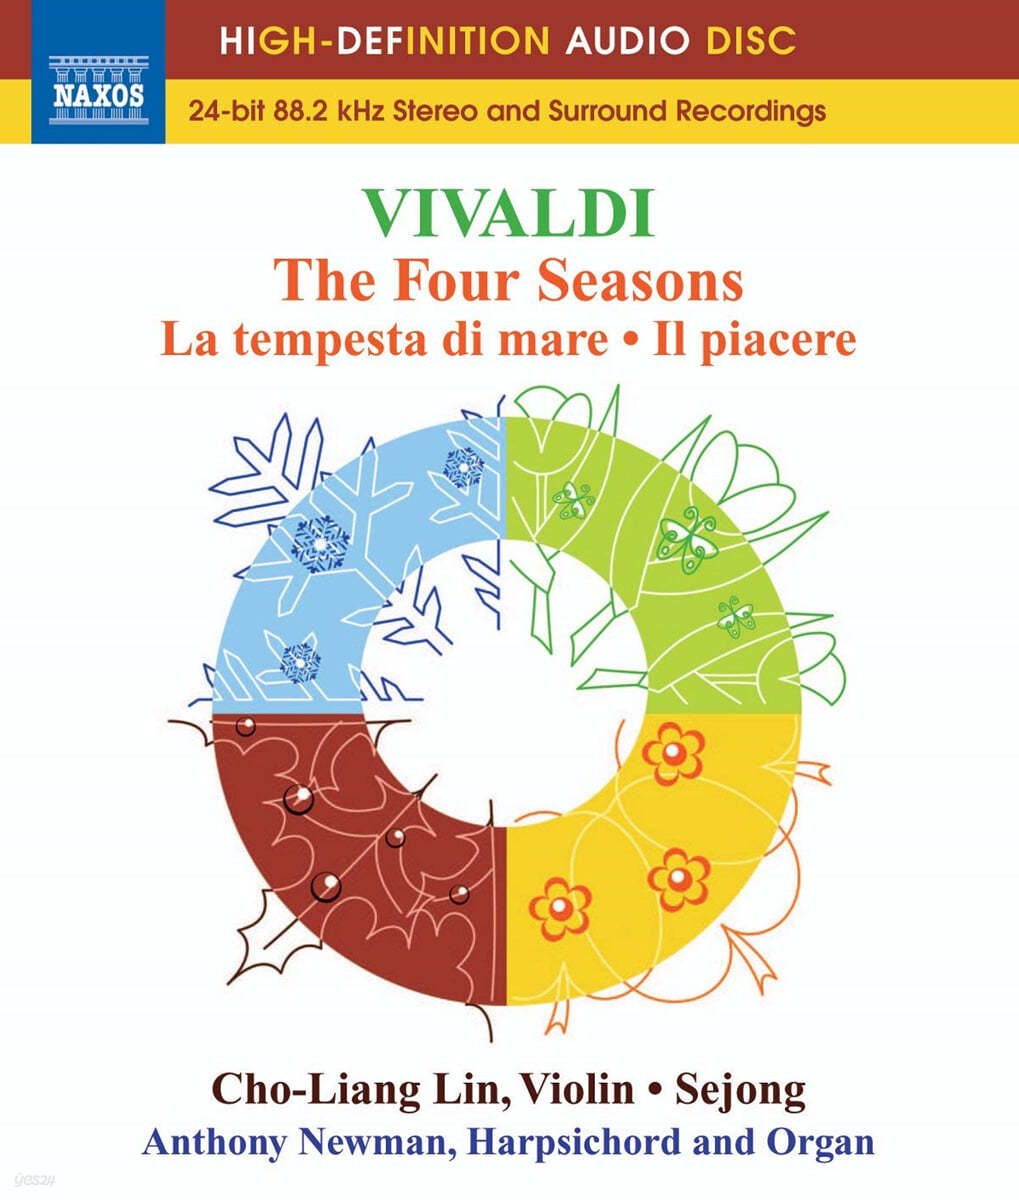 Cho-Liang Lin 비발디: 사계, 바다의 폭풍 - 초량 린 (Vivaldi: The Four Seasons, La tempesta di mare) 